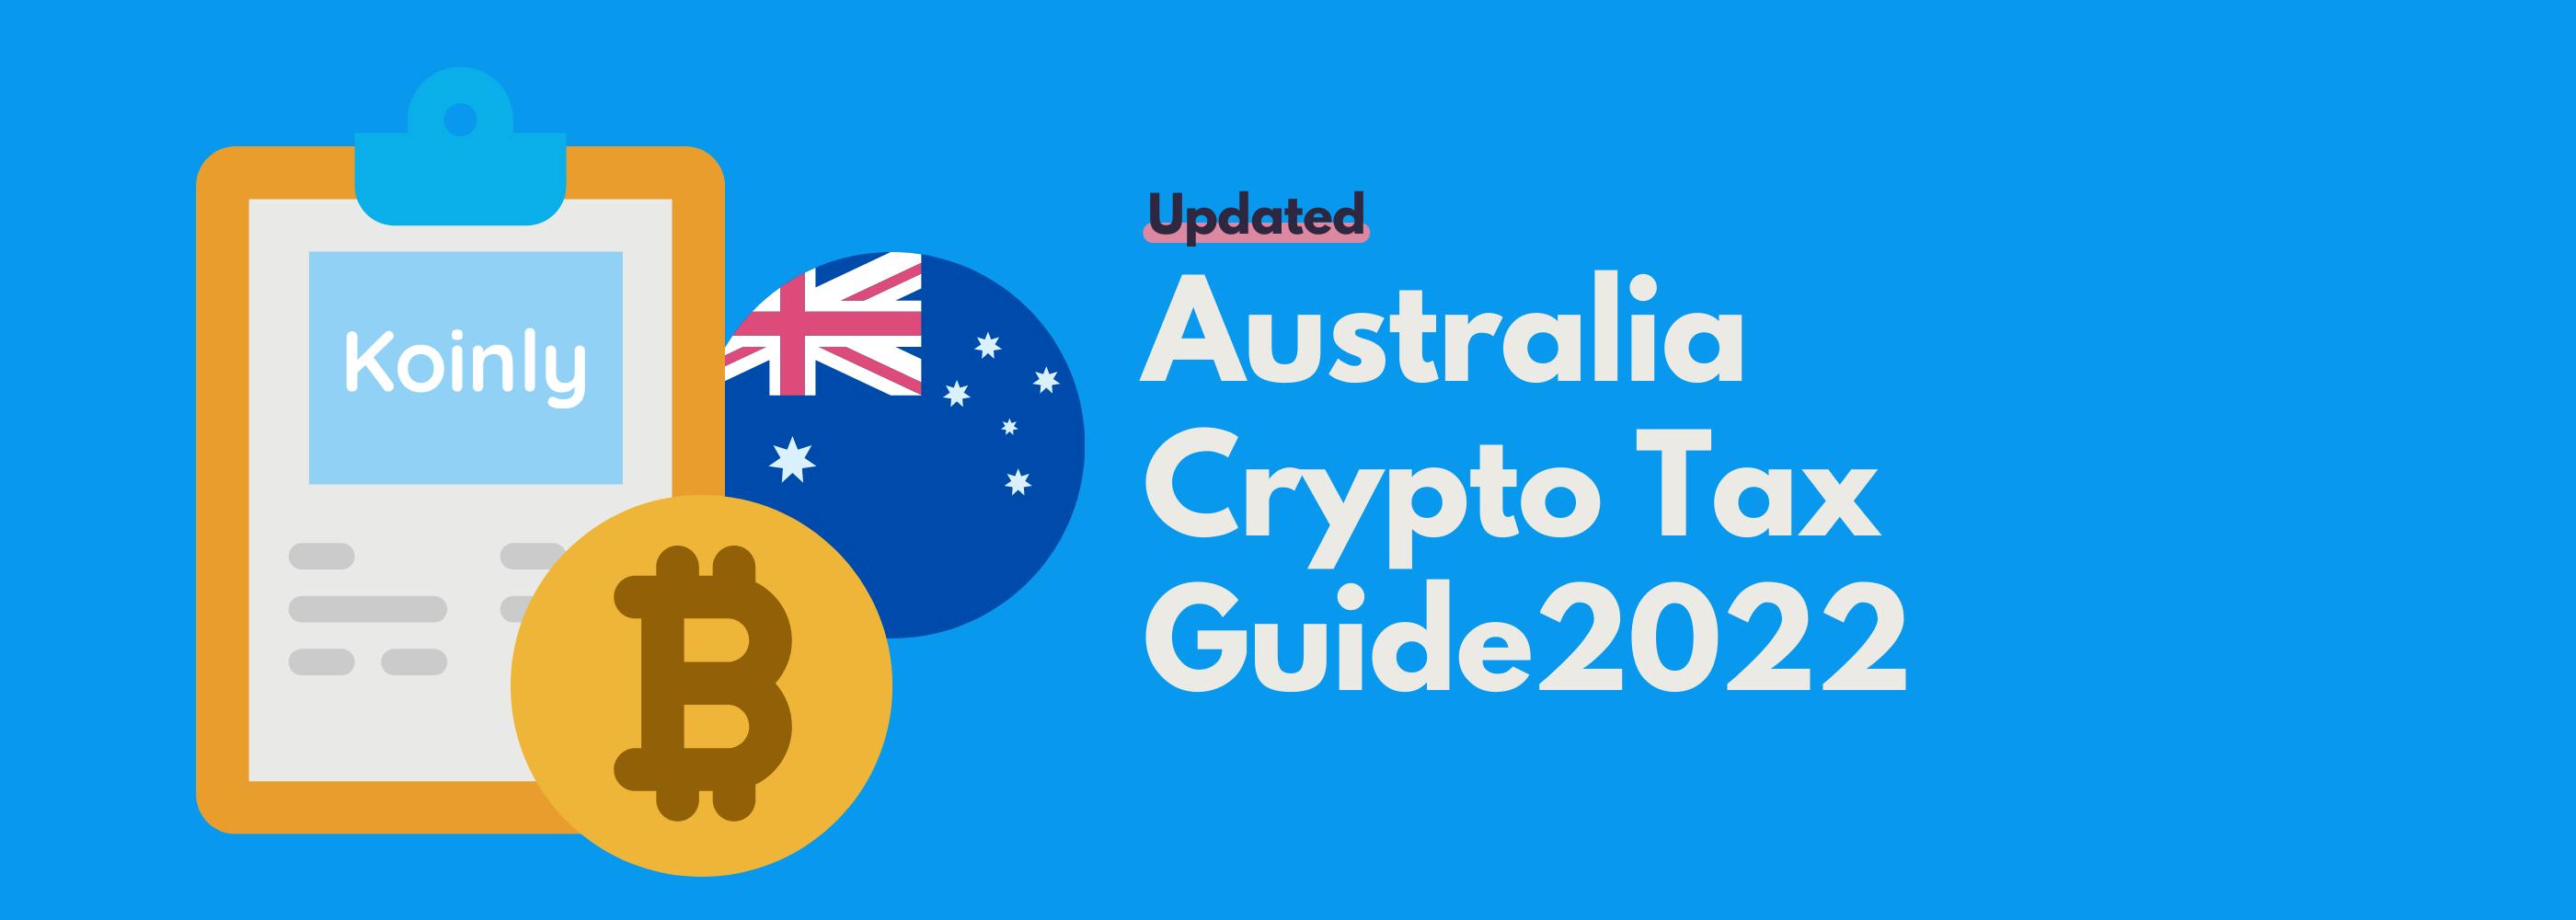 Australia crypto tax guide